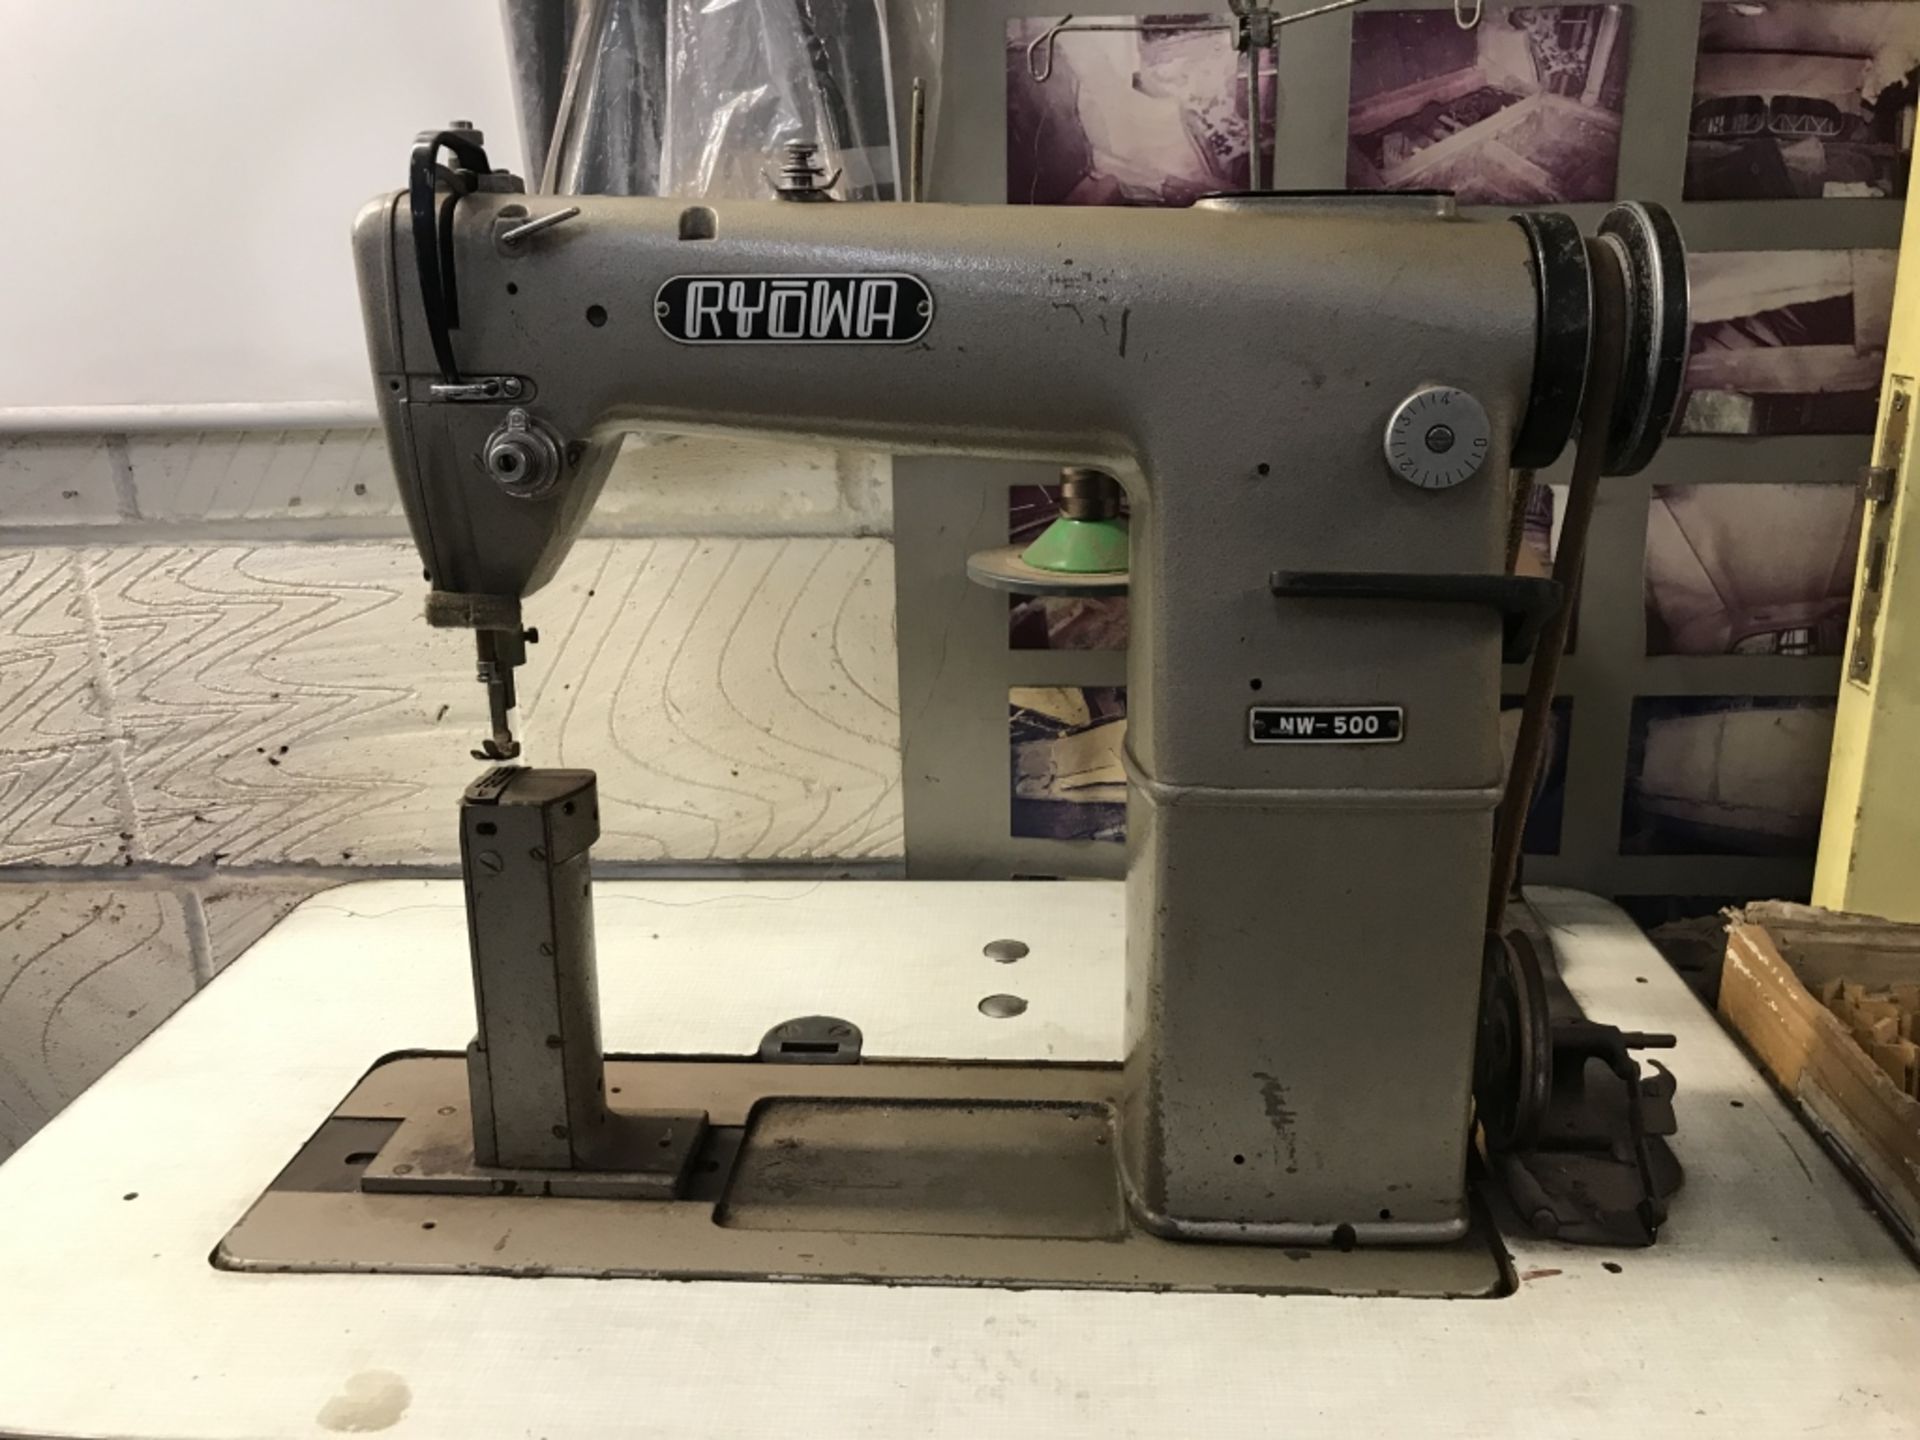 Ryowa NW-500 industrial Post Sewing Machine